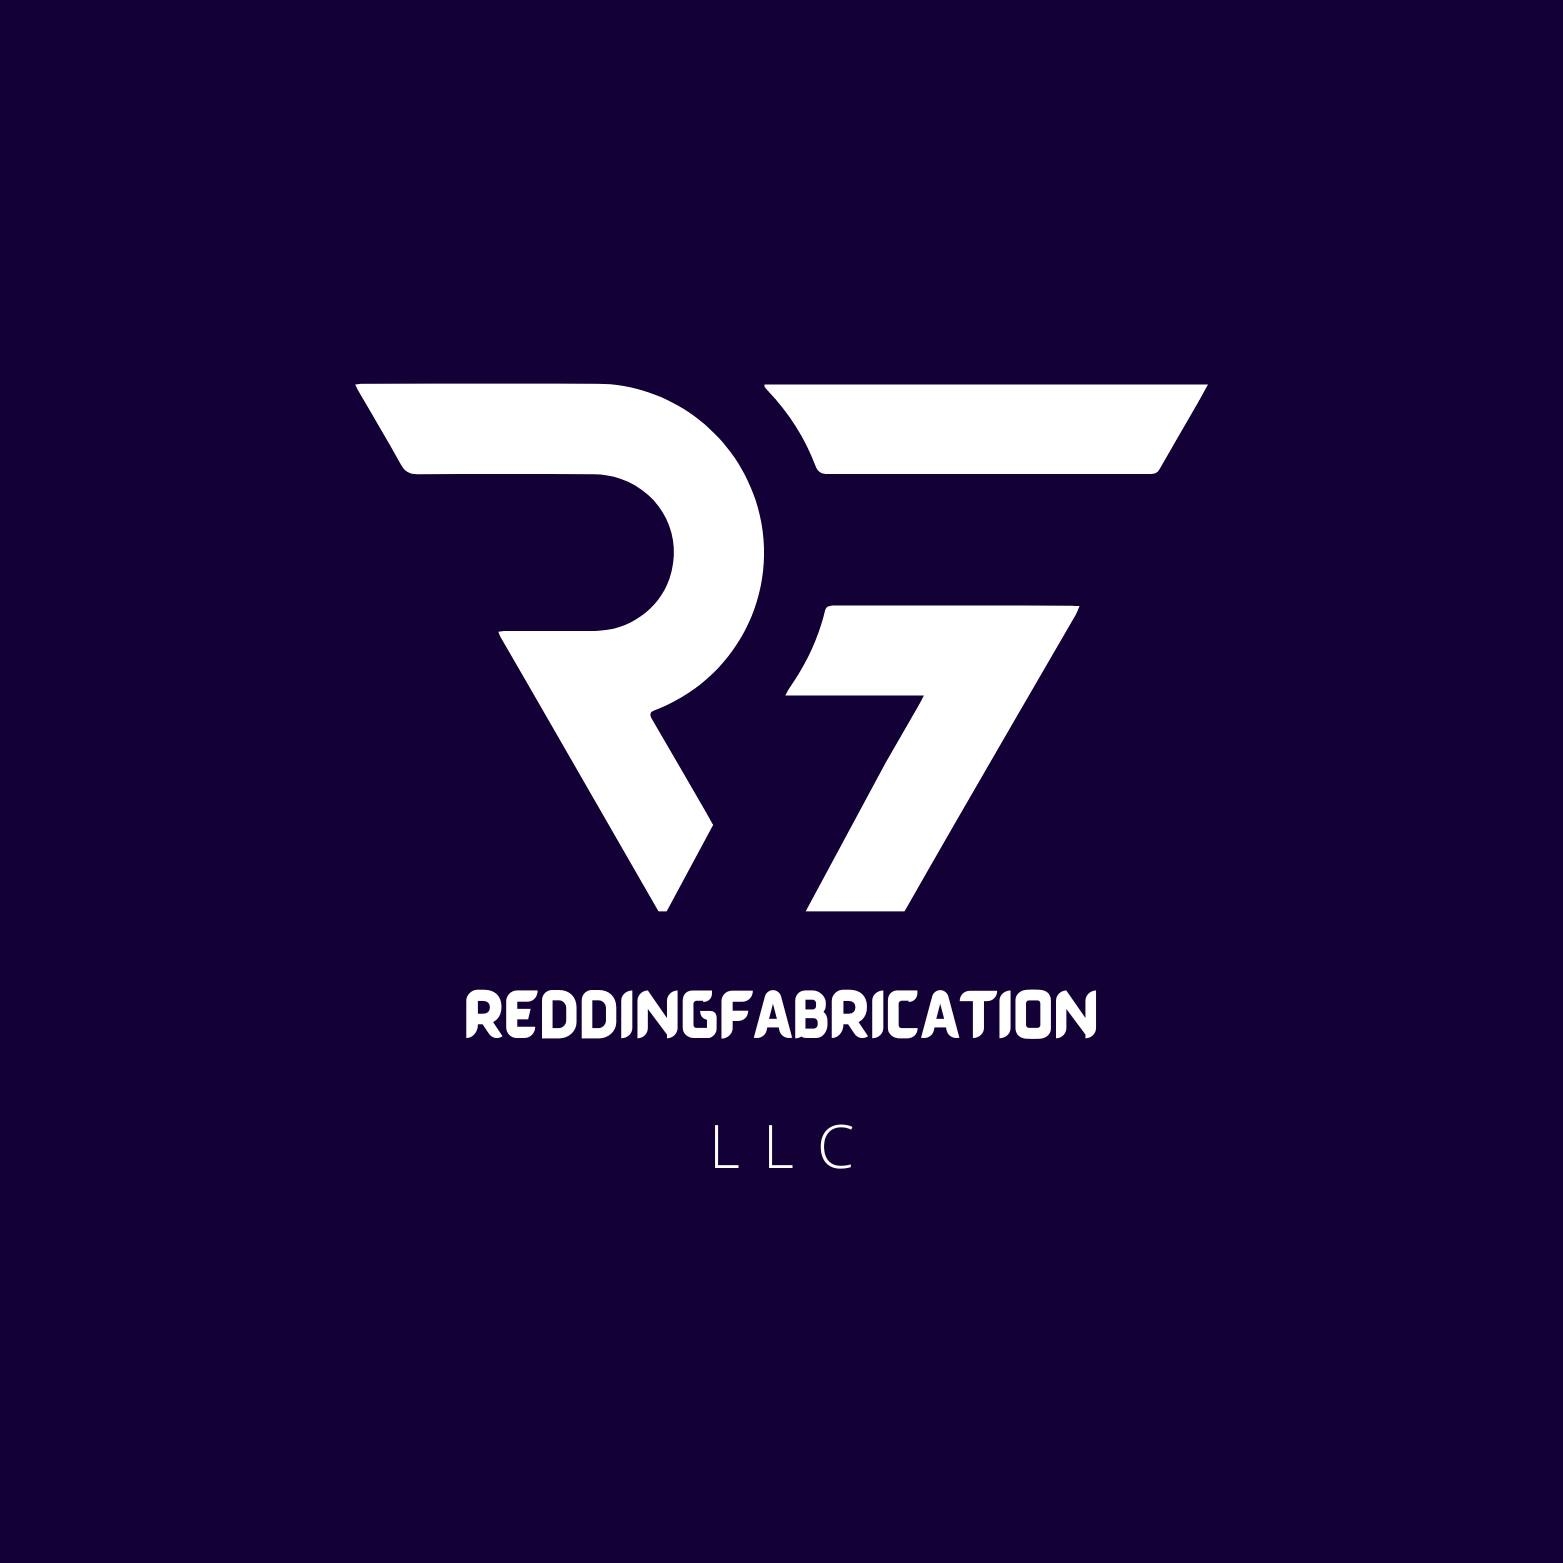 ReddingFabrication LLC Logo